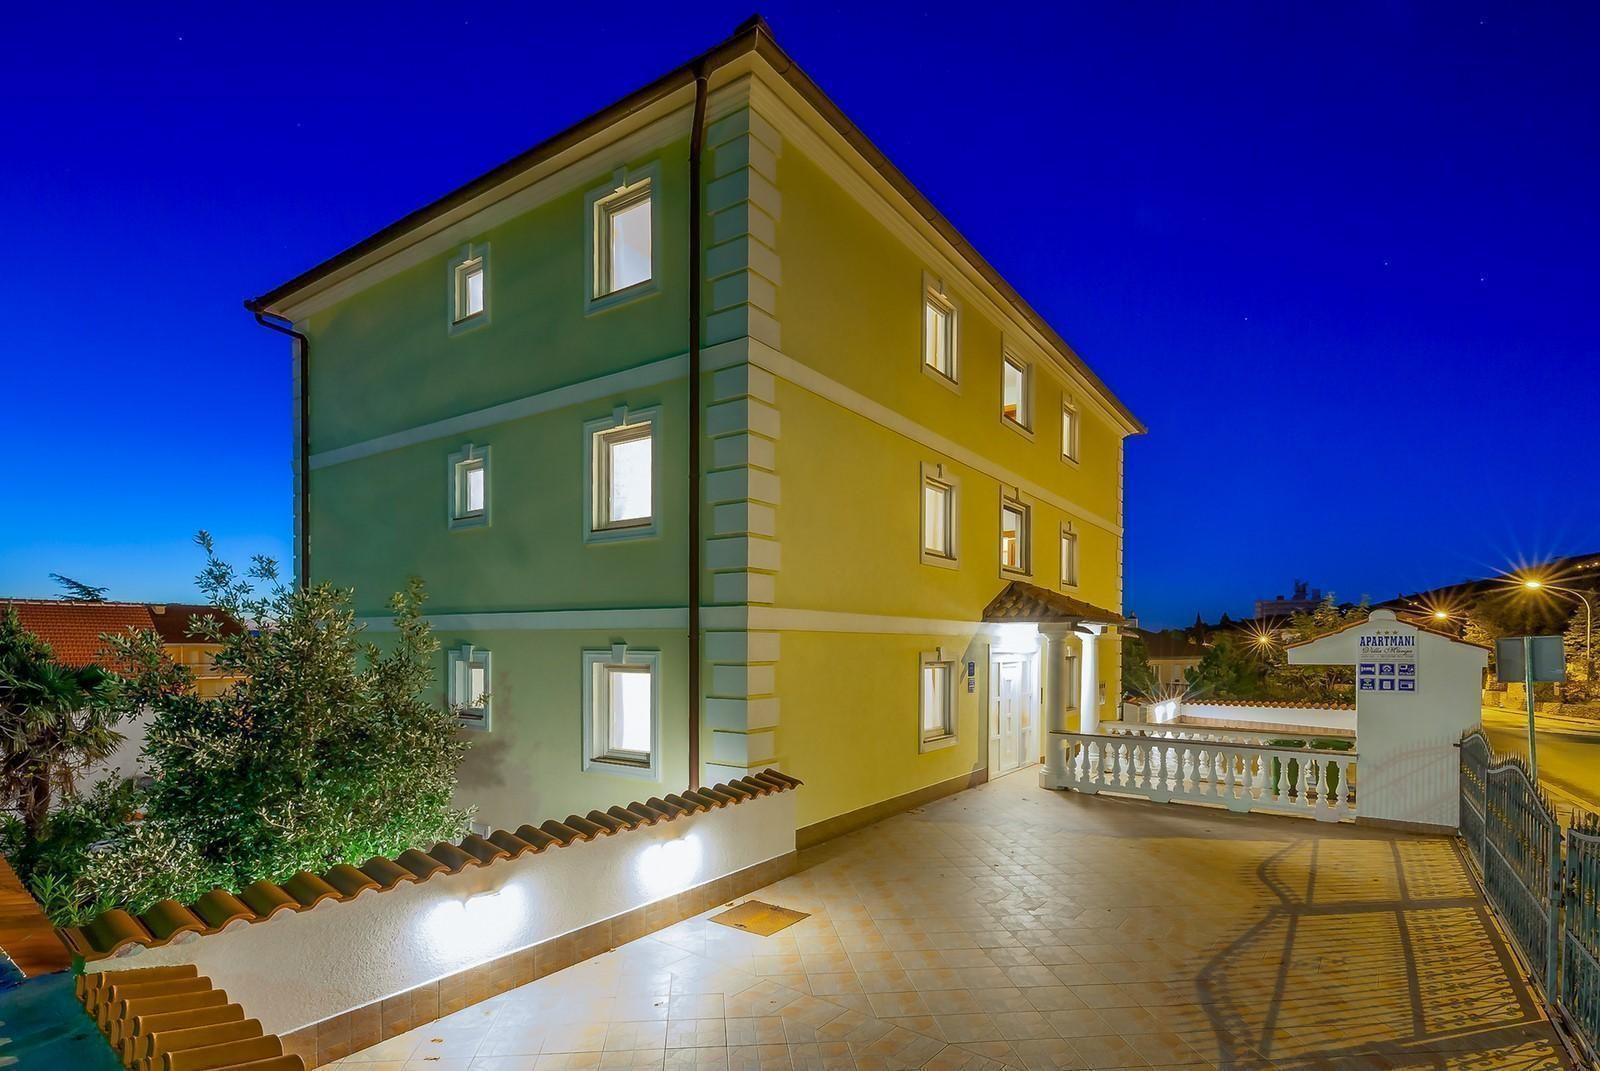 Appartement mit Balkon und Meerblick  in Kroatien